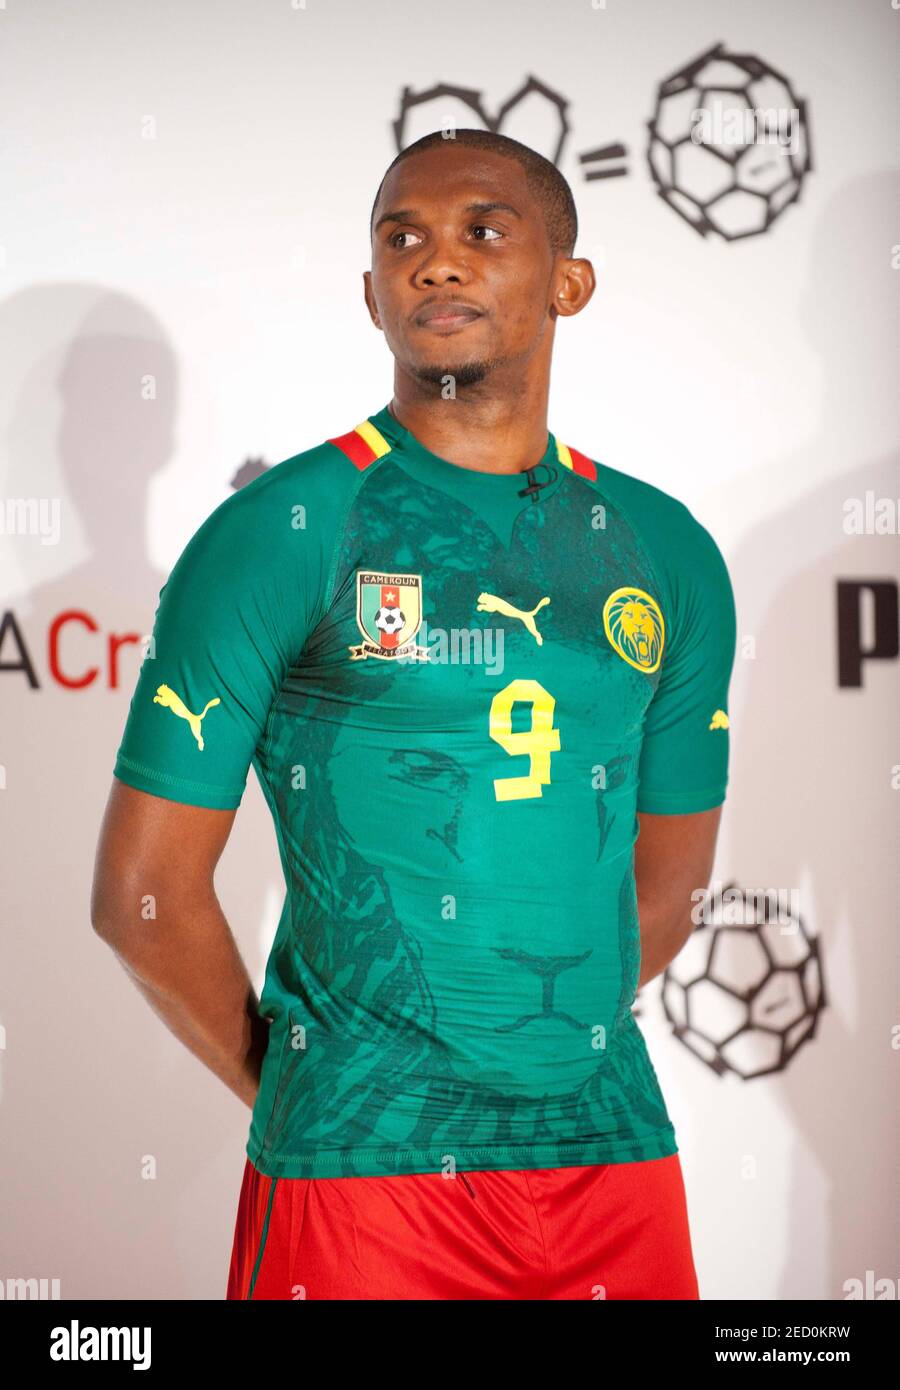 Football - PUMA Unveils 2012 African Football Kits - The Design Museum,  London - 7/11/11 Samuel Eto'o of Cameroon during the unveiling of the new  Puma 2012 African football kits Mandatory Credit: